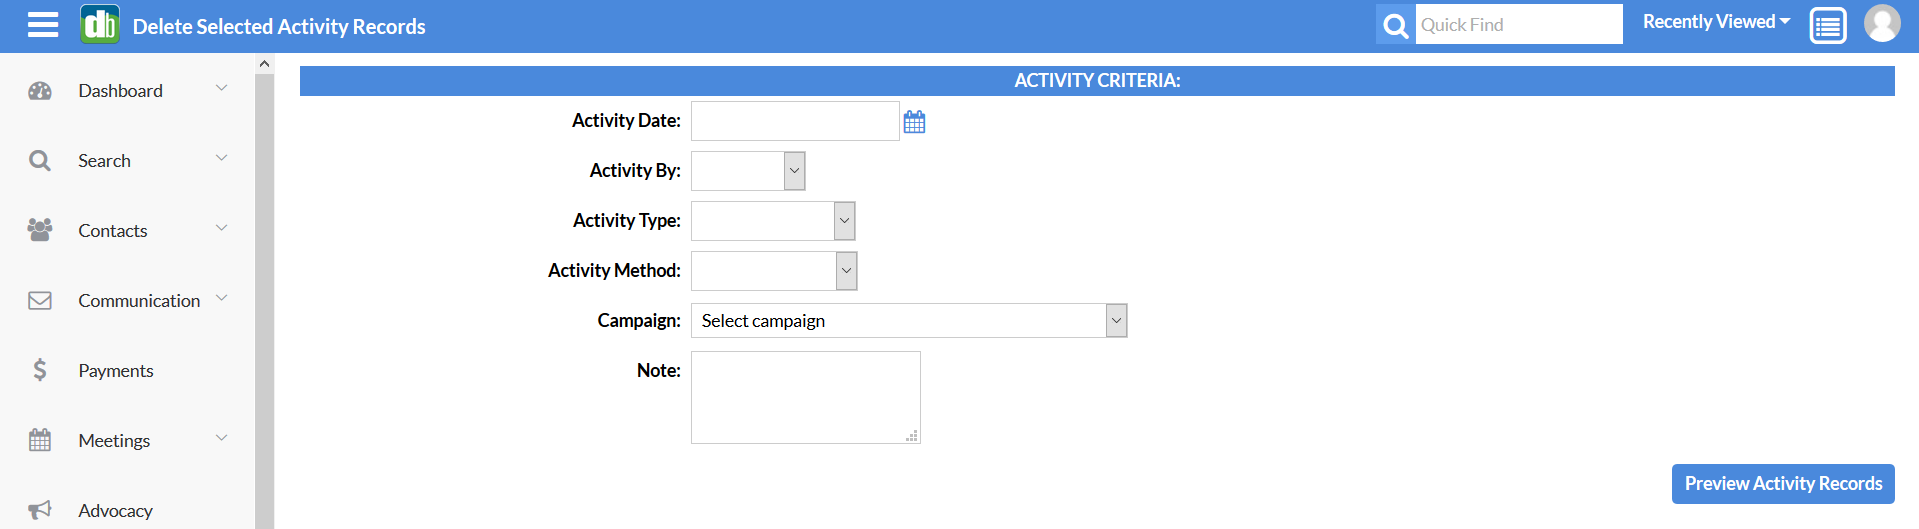 delete_activity_criteria.png